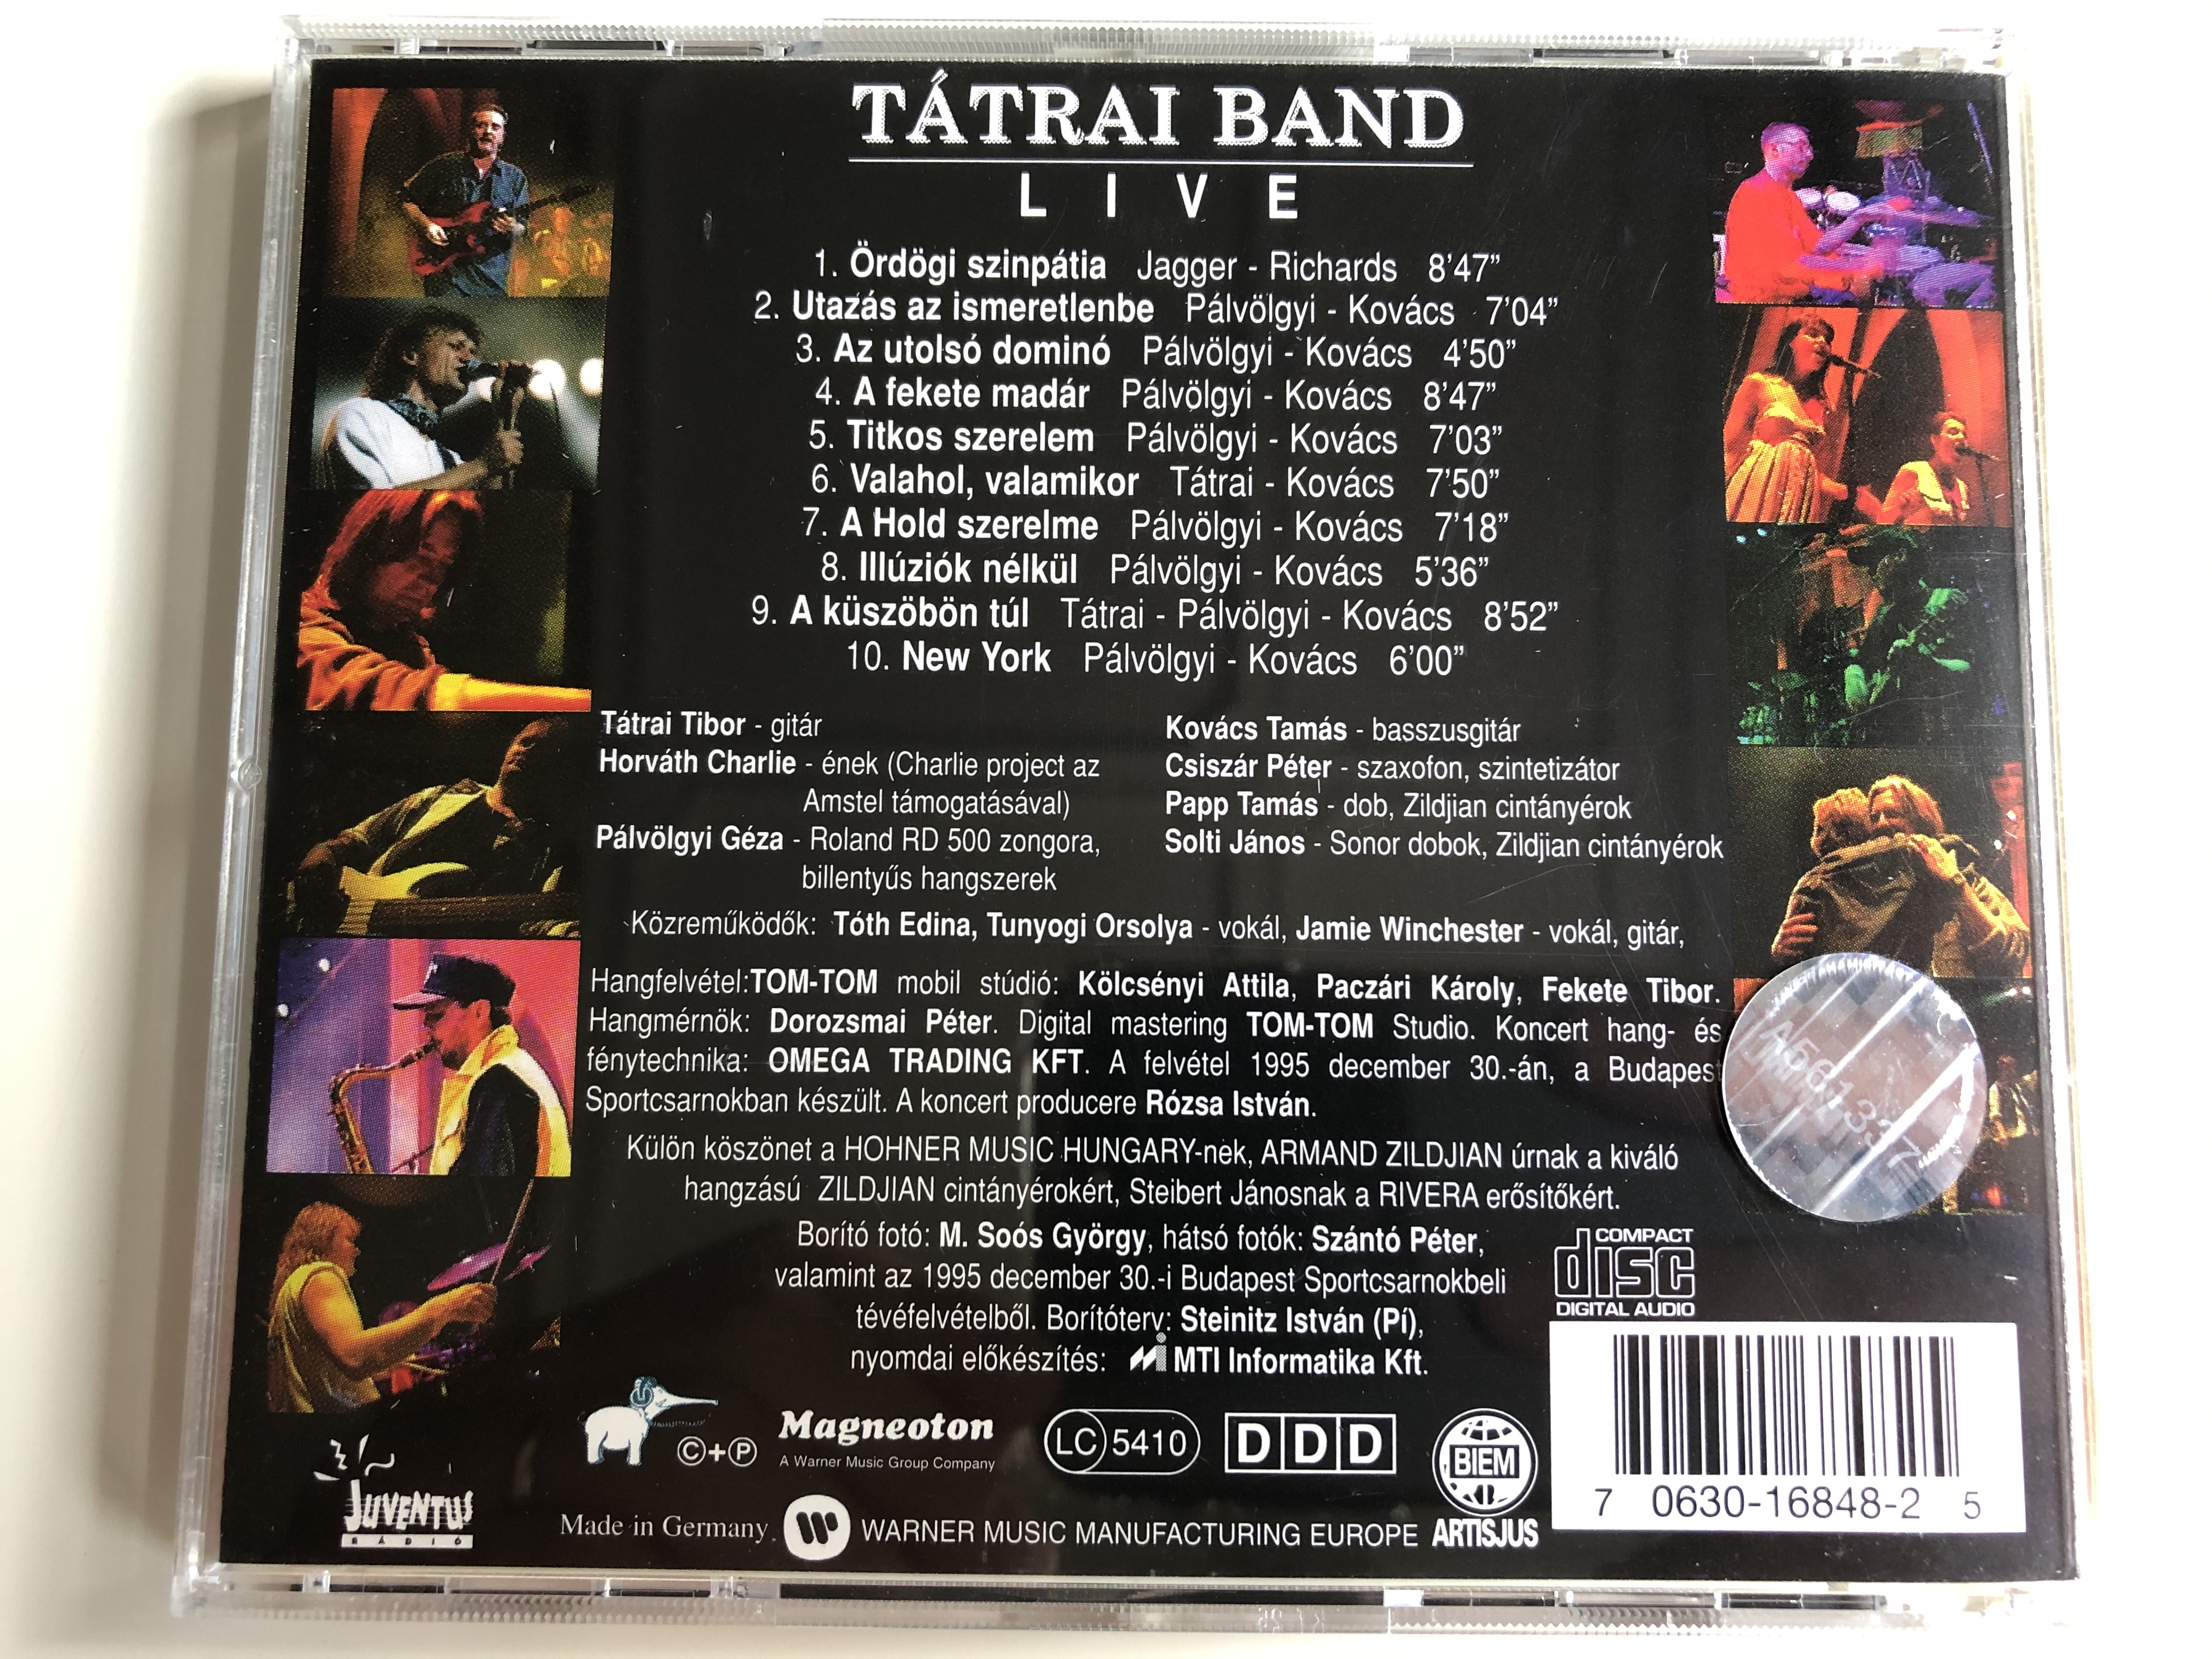 t-trai-band-live-magneoton-audio-cd-0630-16848-2-4-.jpg